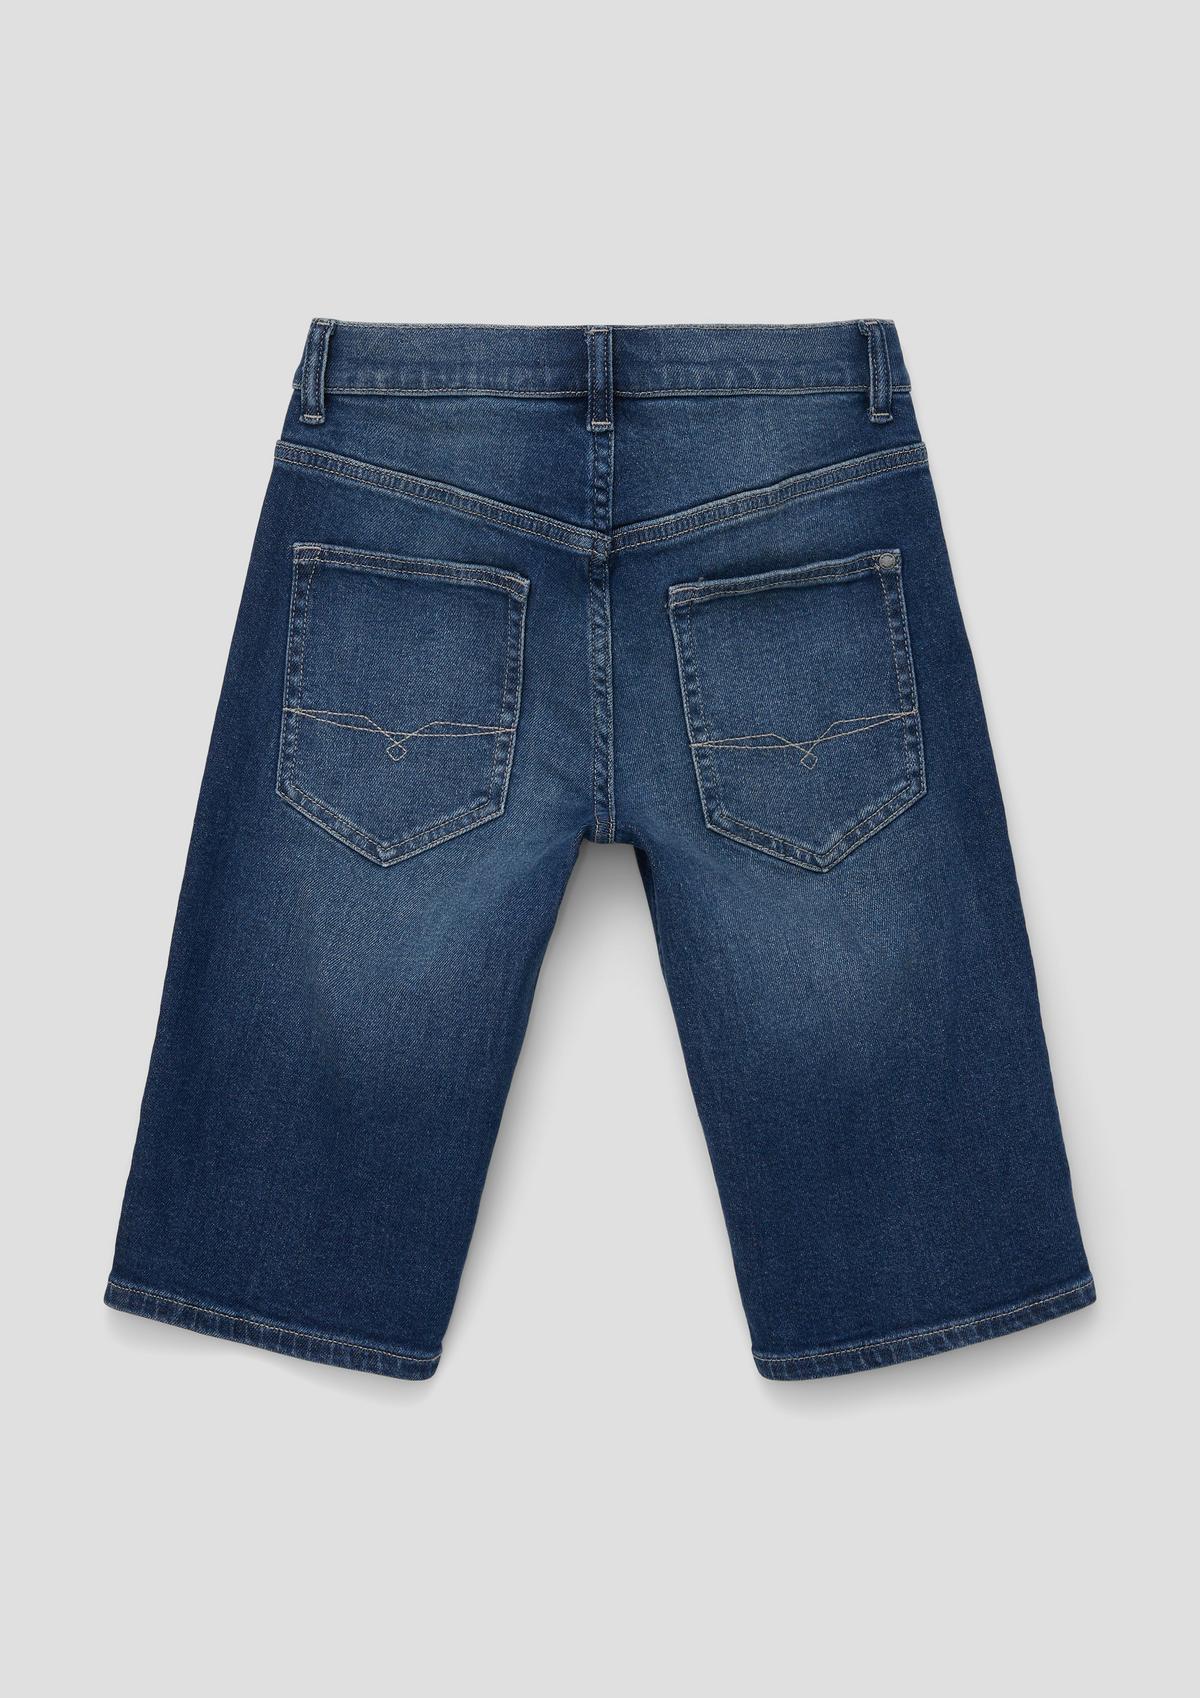 s.Oliver Pete jeans / regular fit / mid rise / slim leg